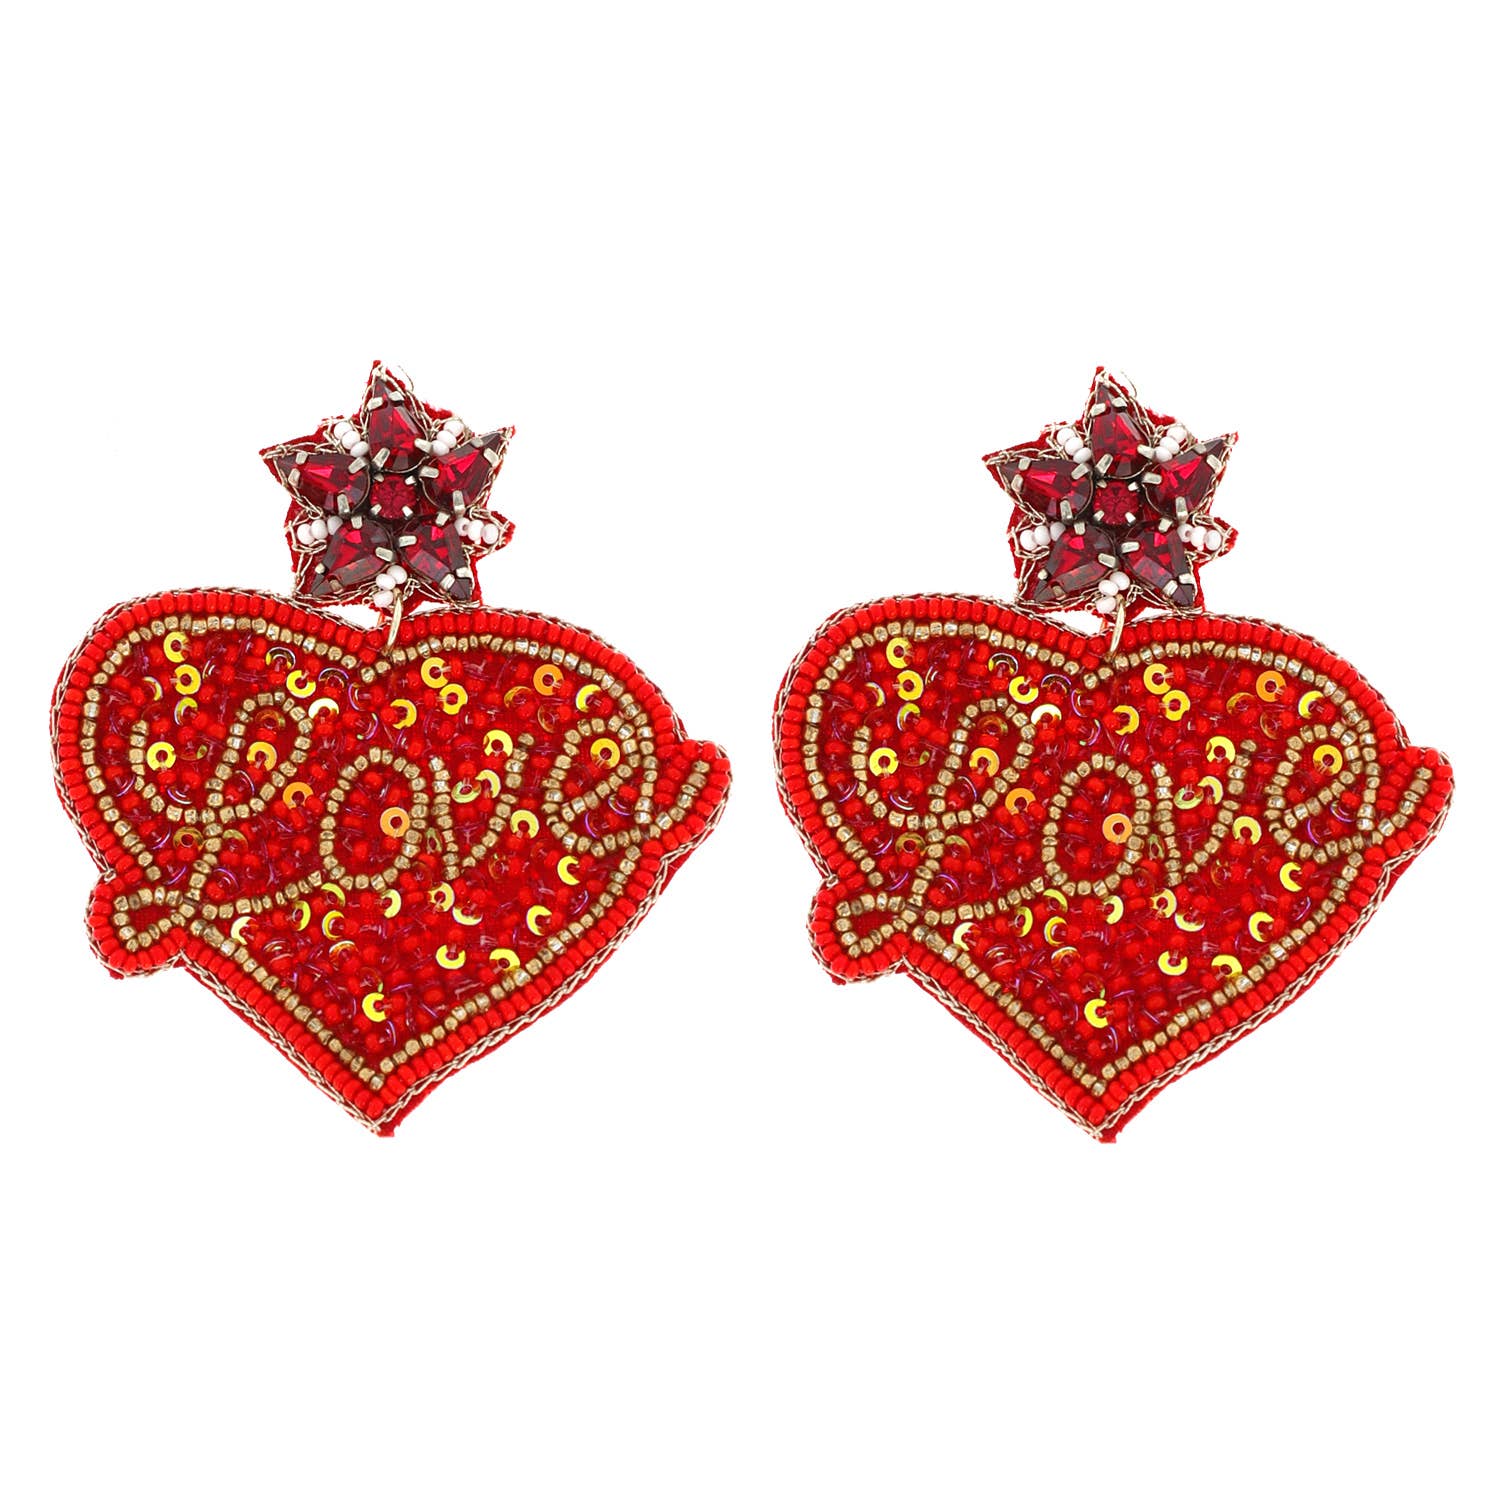 Jeweled Heart Shaped Handmade Beaded Earrings: Red